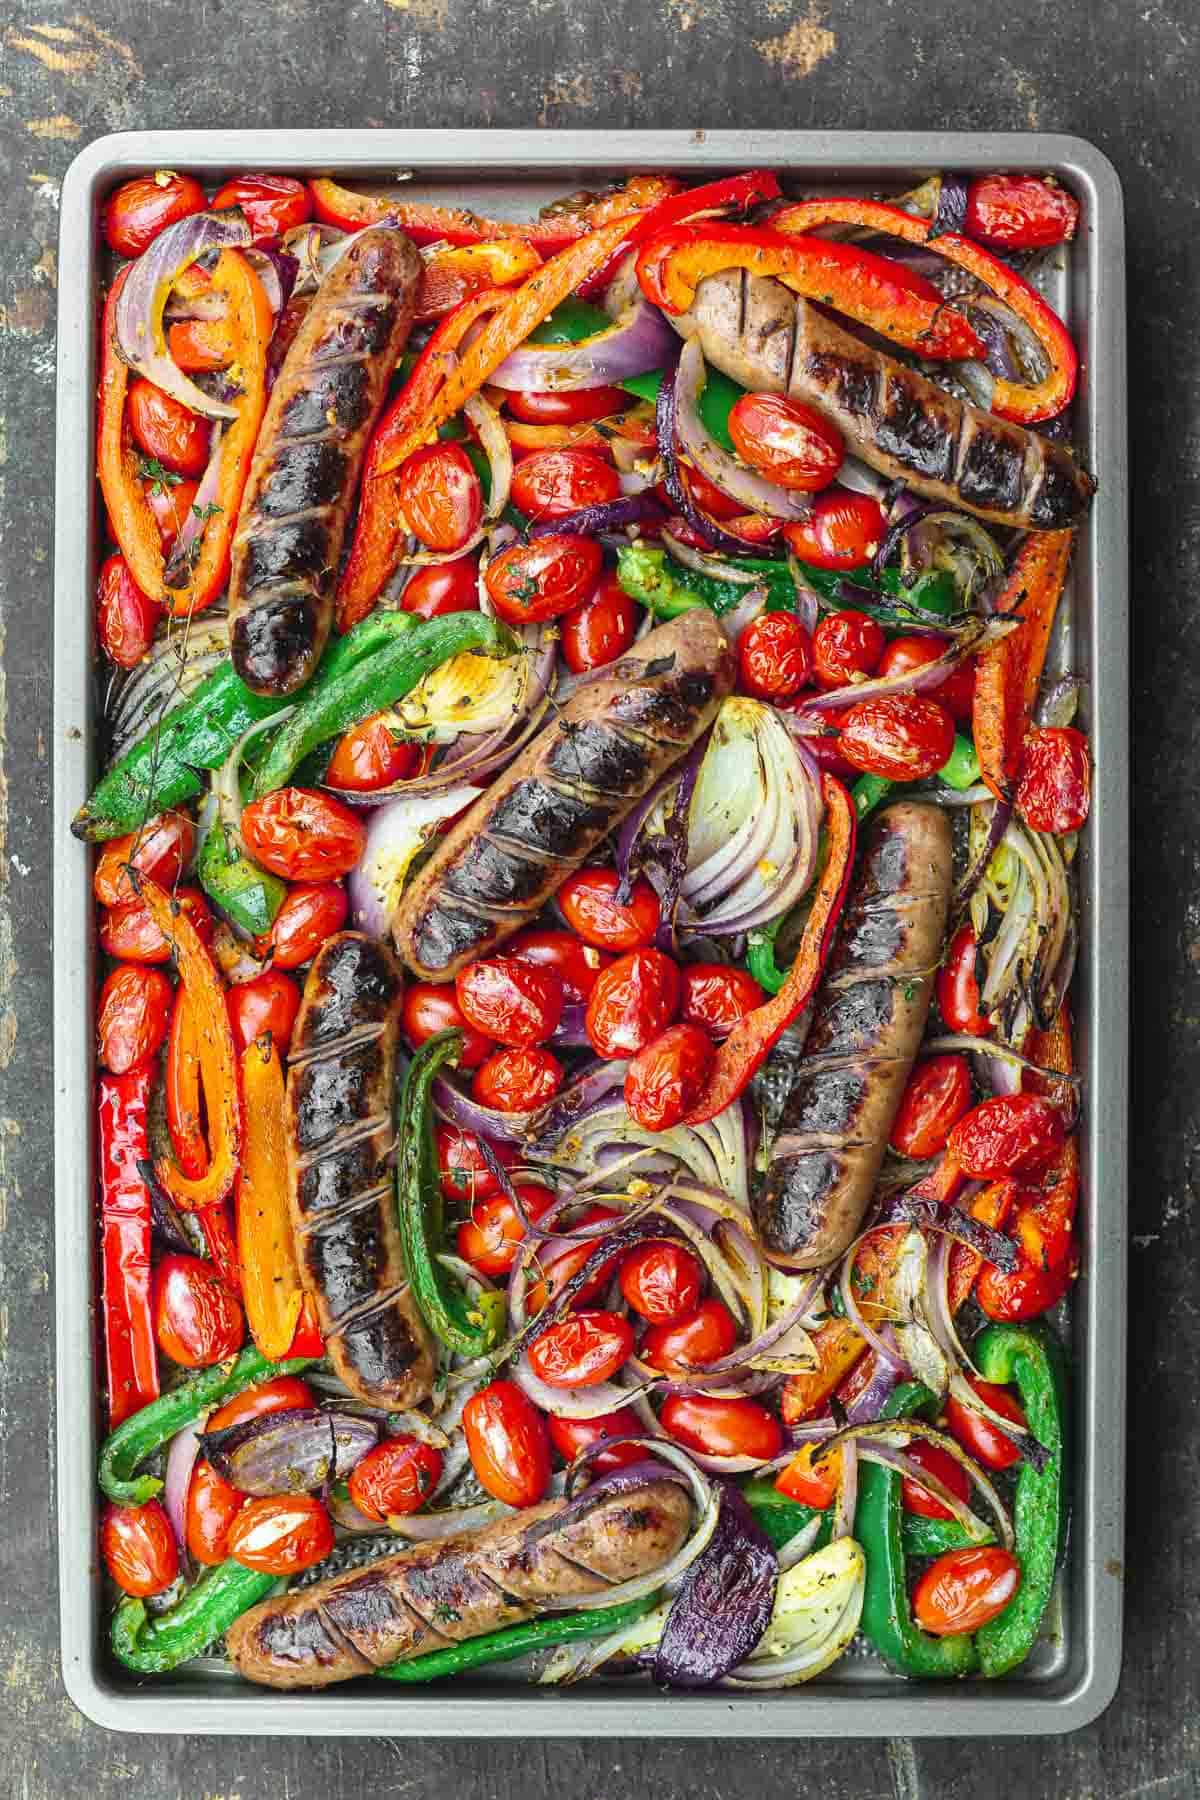 https://www.themediterraneandish.com/wp-content/uploads/2022/10/sheet-pan-chicken-sausage-and-peppers-recipe-6.jpg